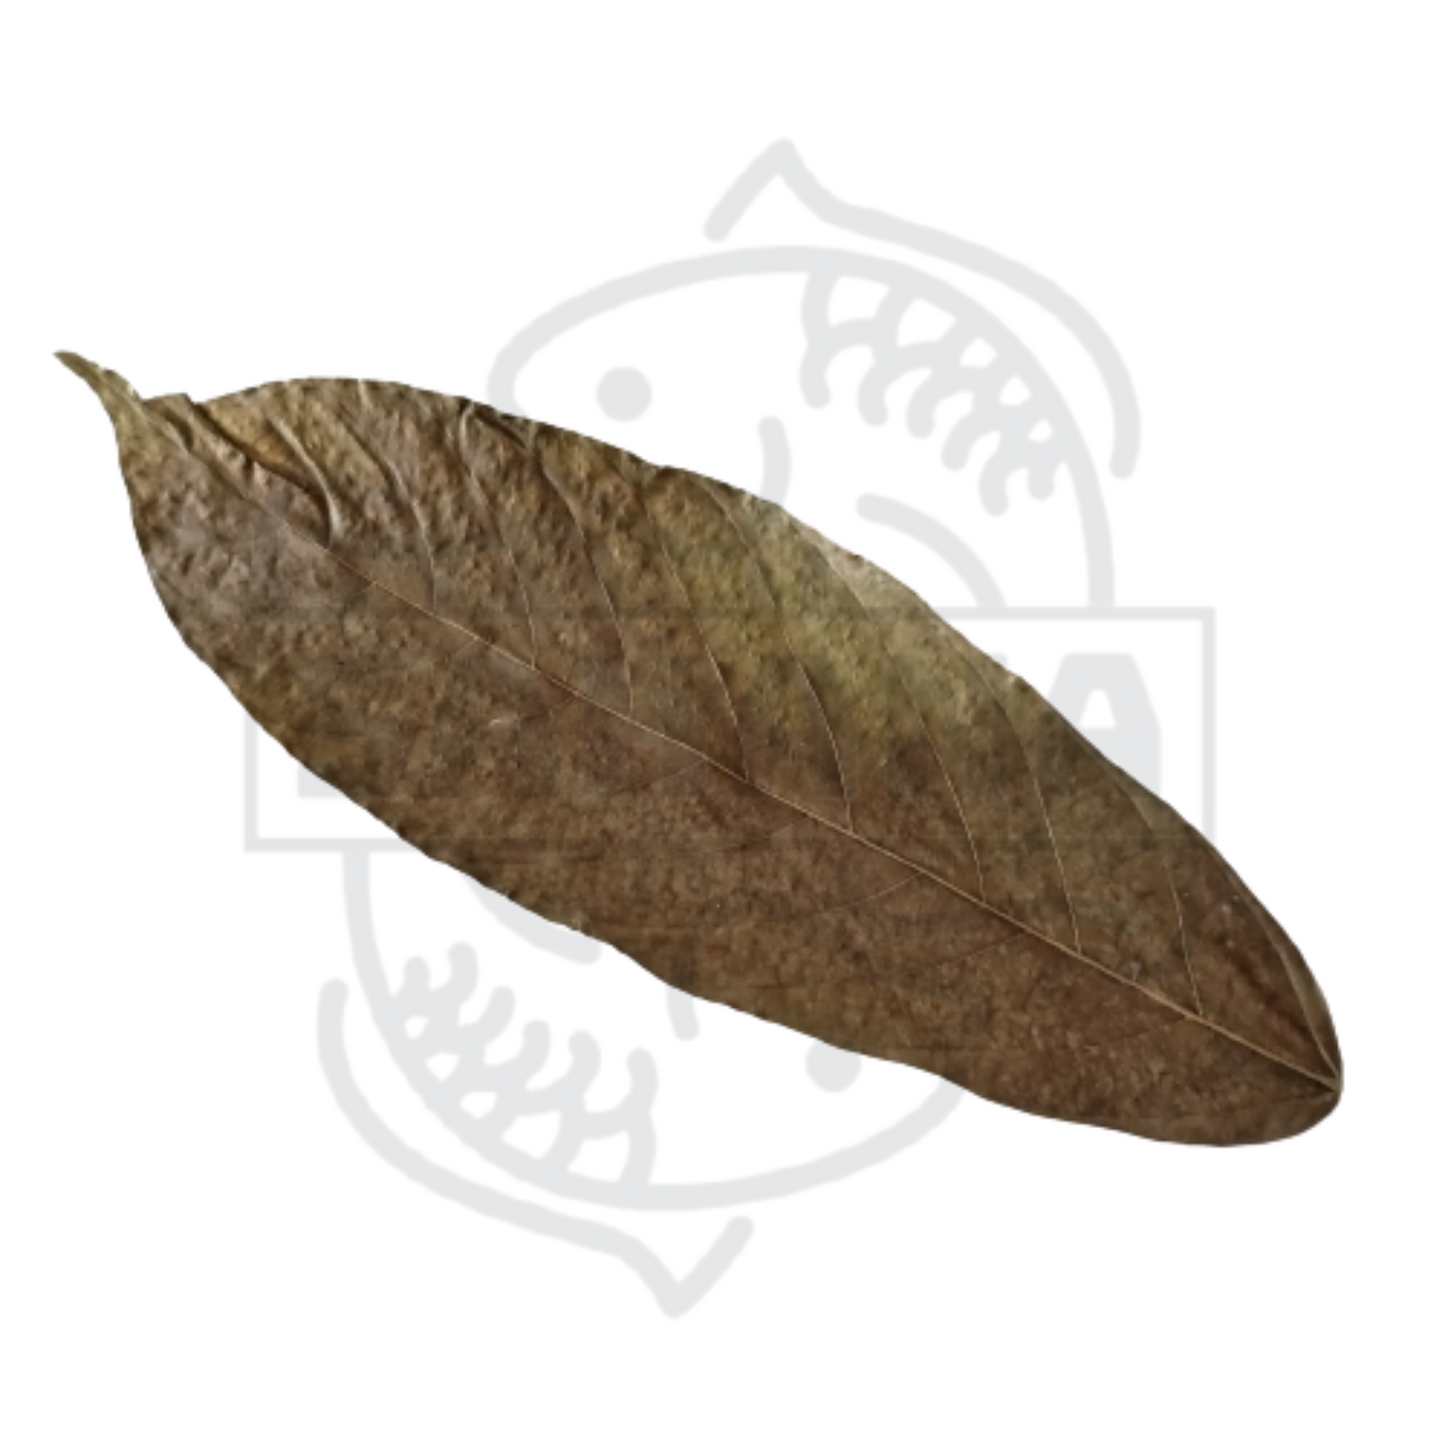 XXL cocoa leaf - pack of 5 units